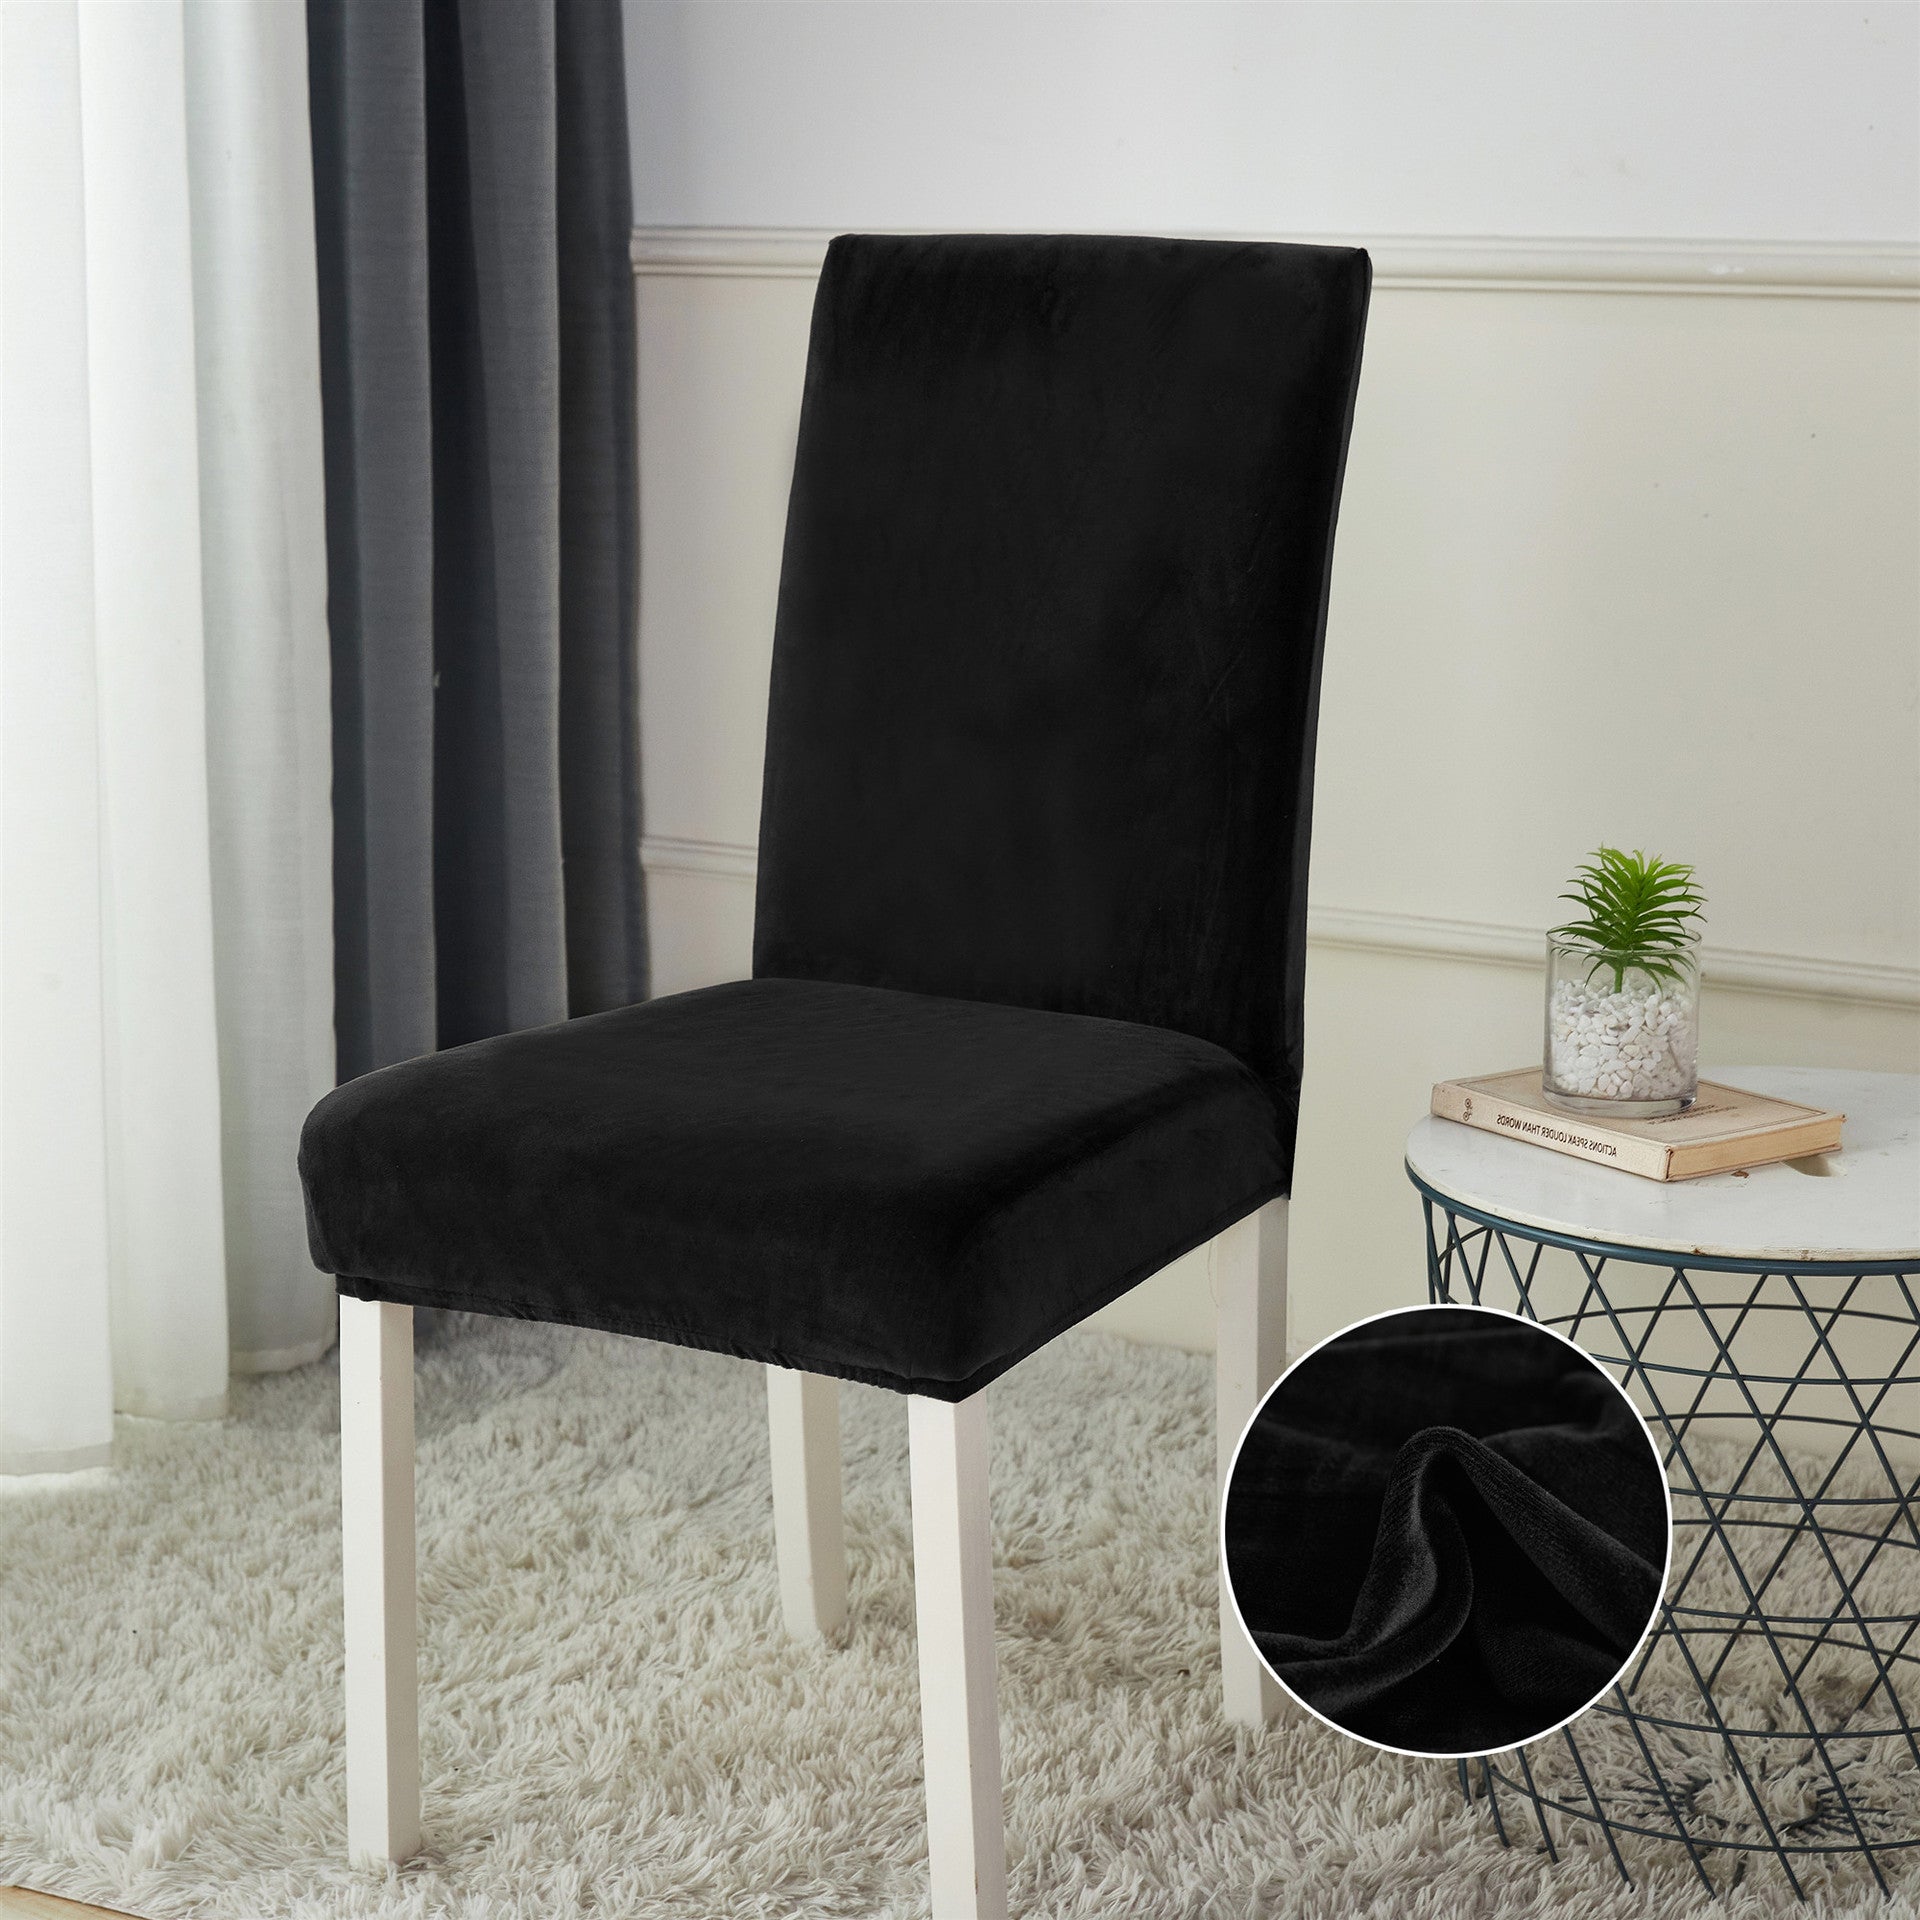 Bulk 2 Pcs Velvet Stretch Chair Covers Removable Washable Slipcover for Home Decor Wholesale